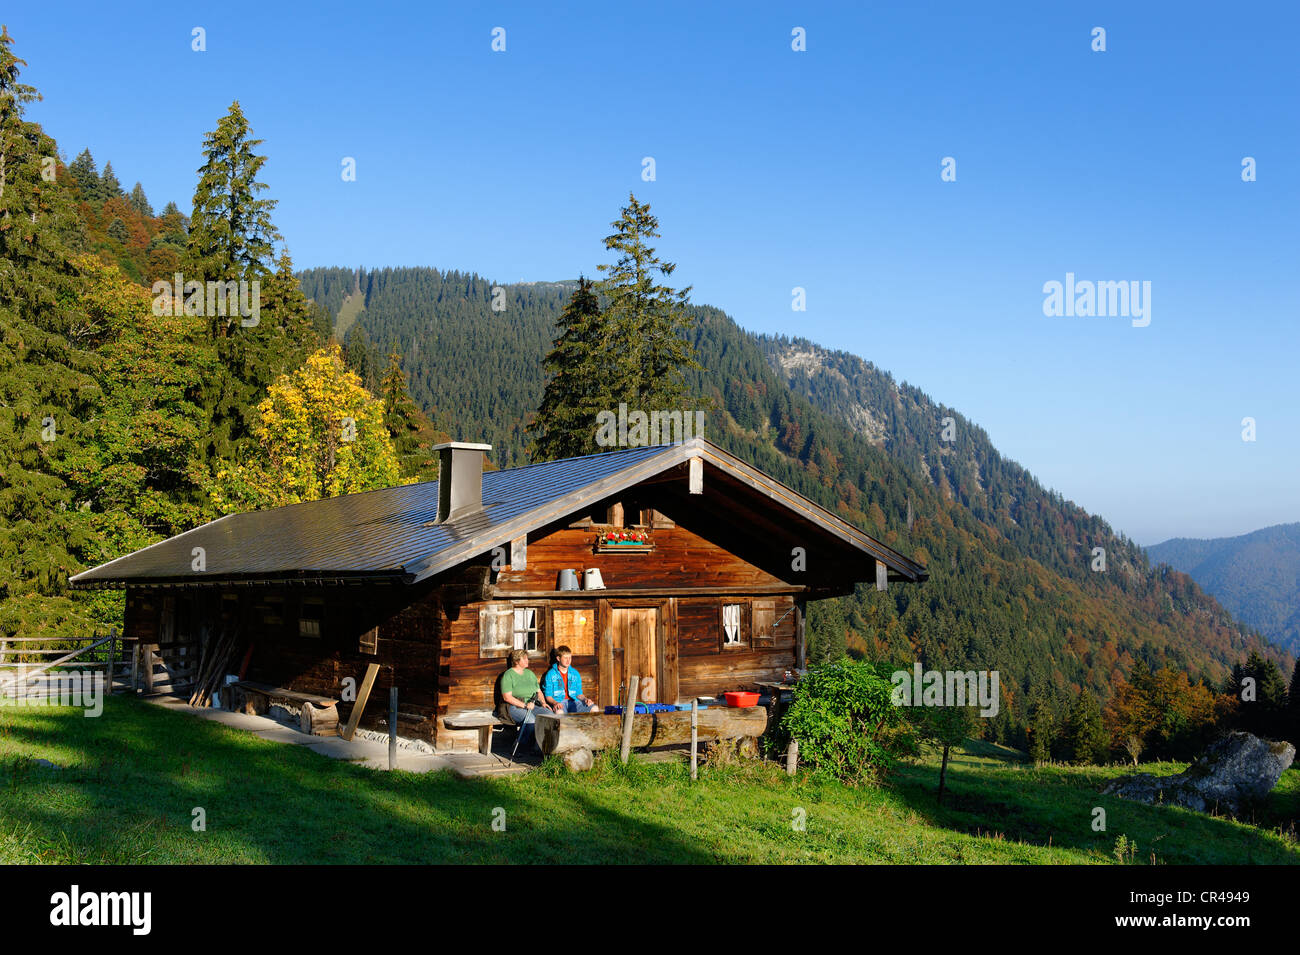 Sieblialm alp, Valepp, Tegernsee region, Upper Bavaria, Bavaria, Germany, Europe Stock Photo